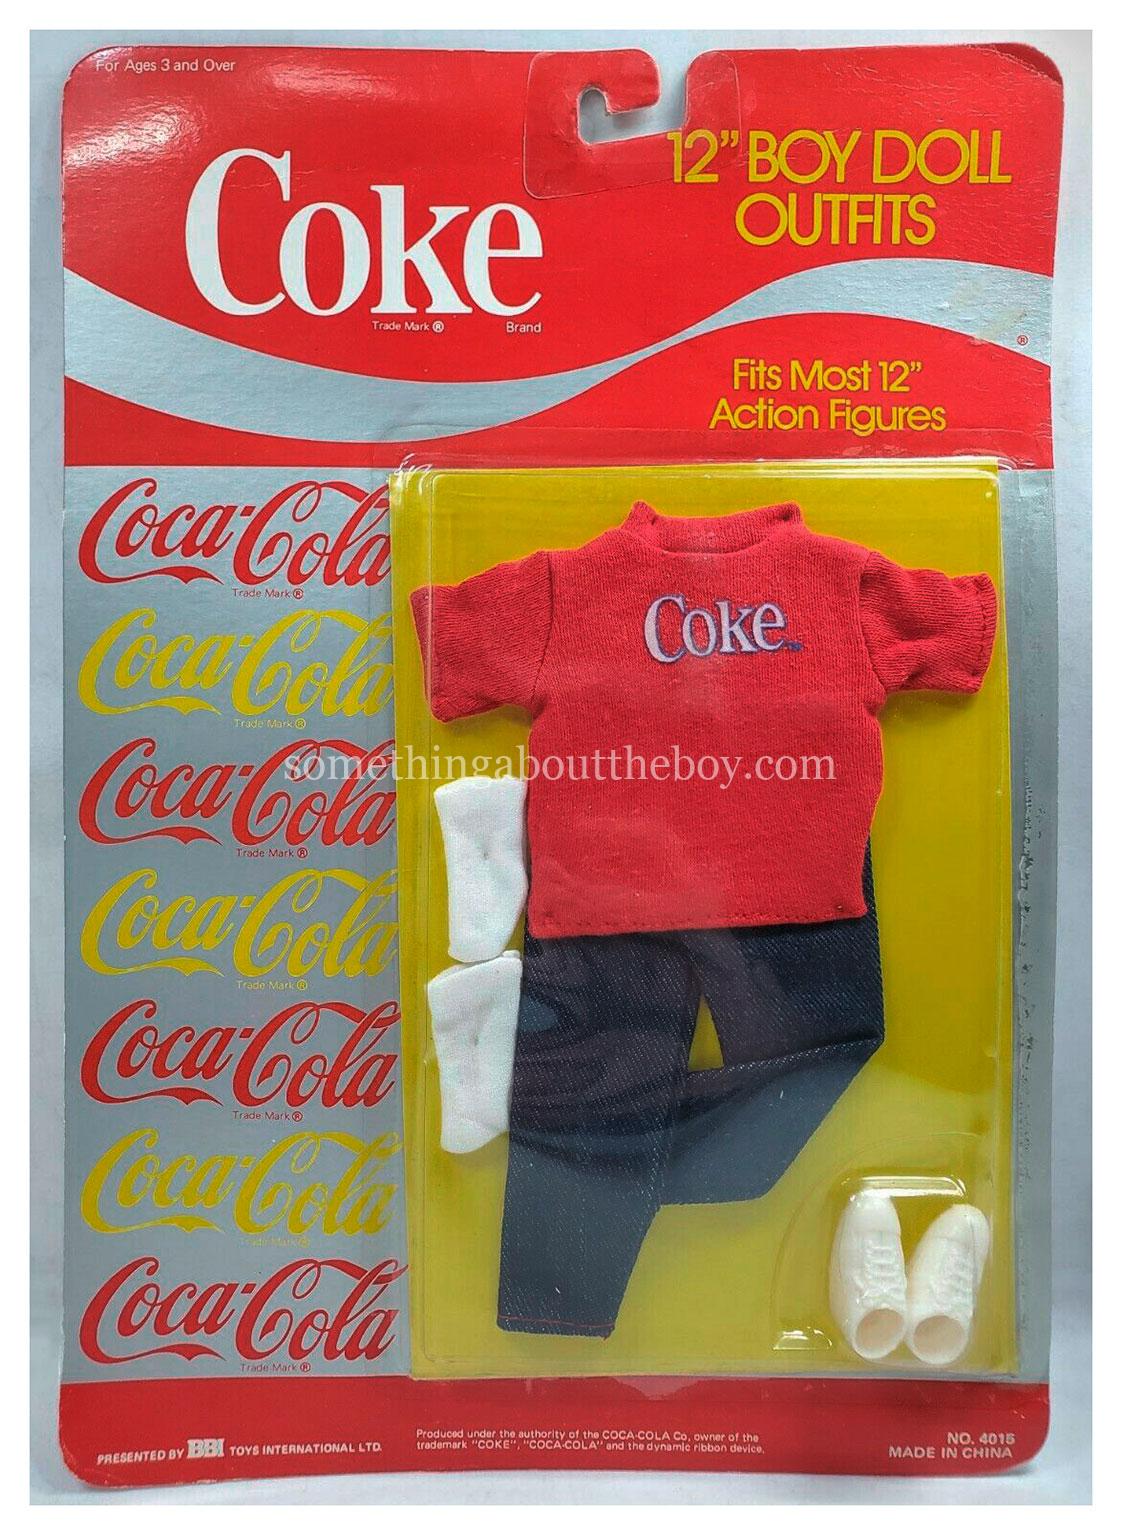 Coke Outfit by BBI Toys International Ltd